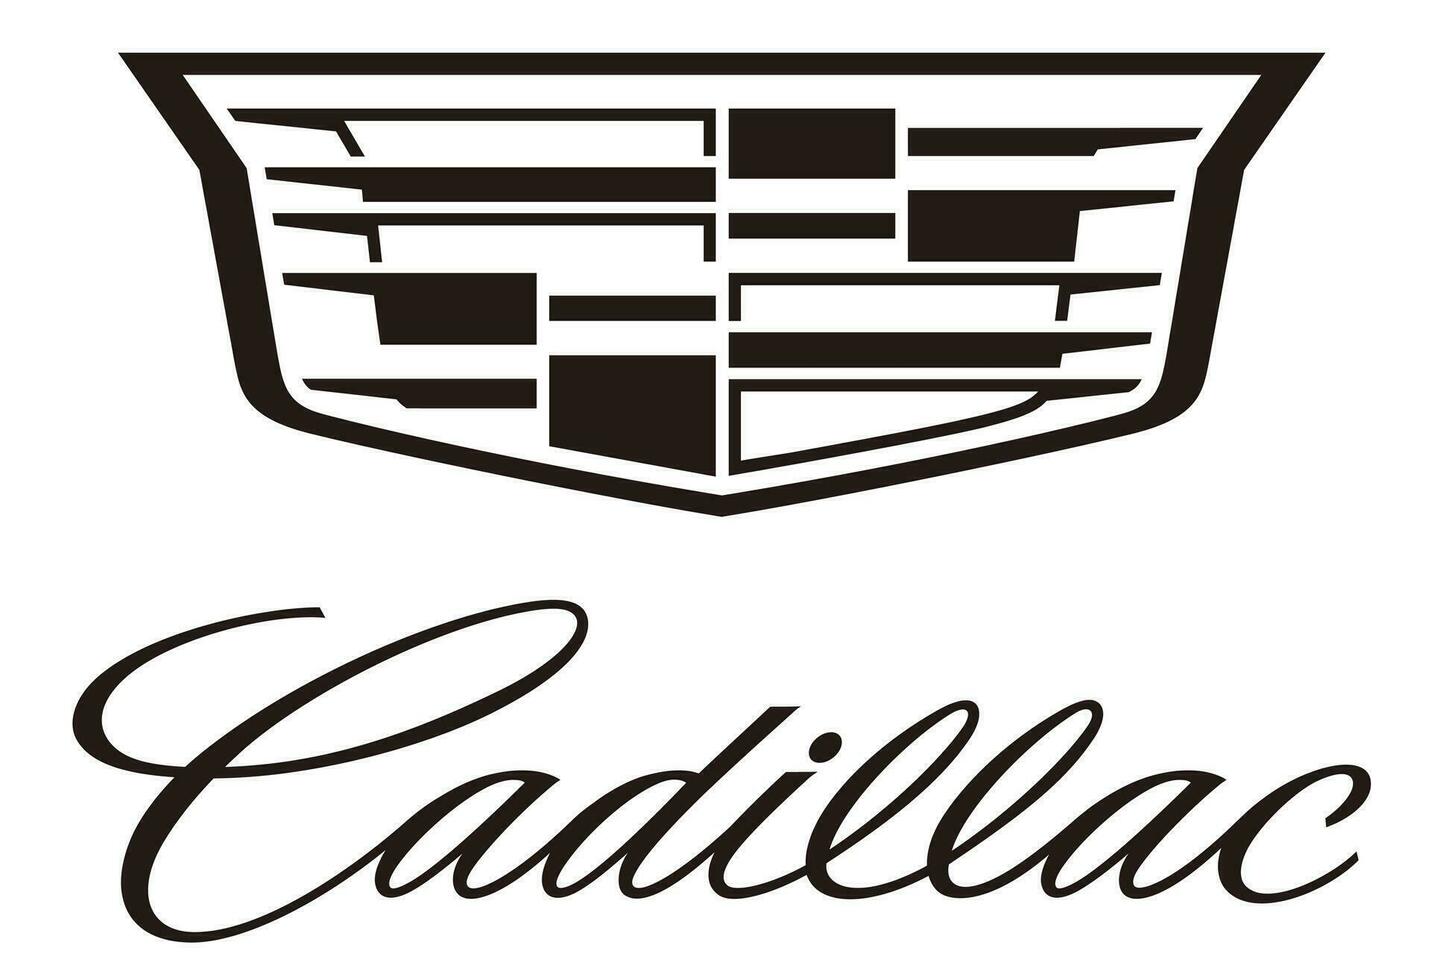 Cadillac car logo vector illustration